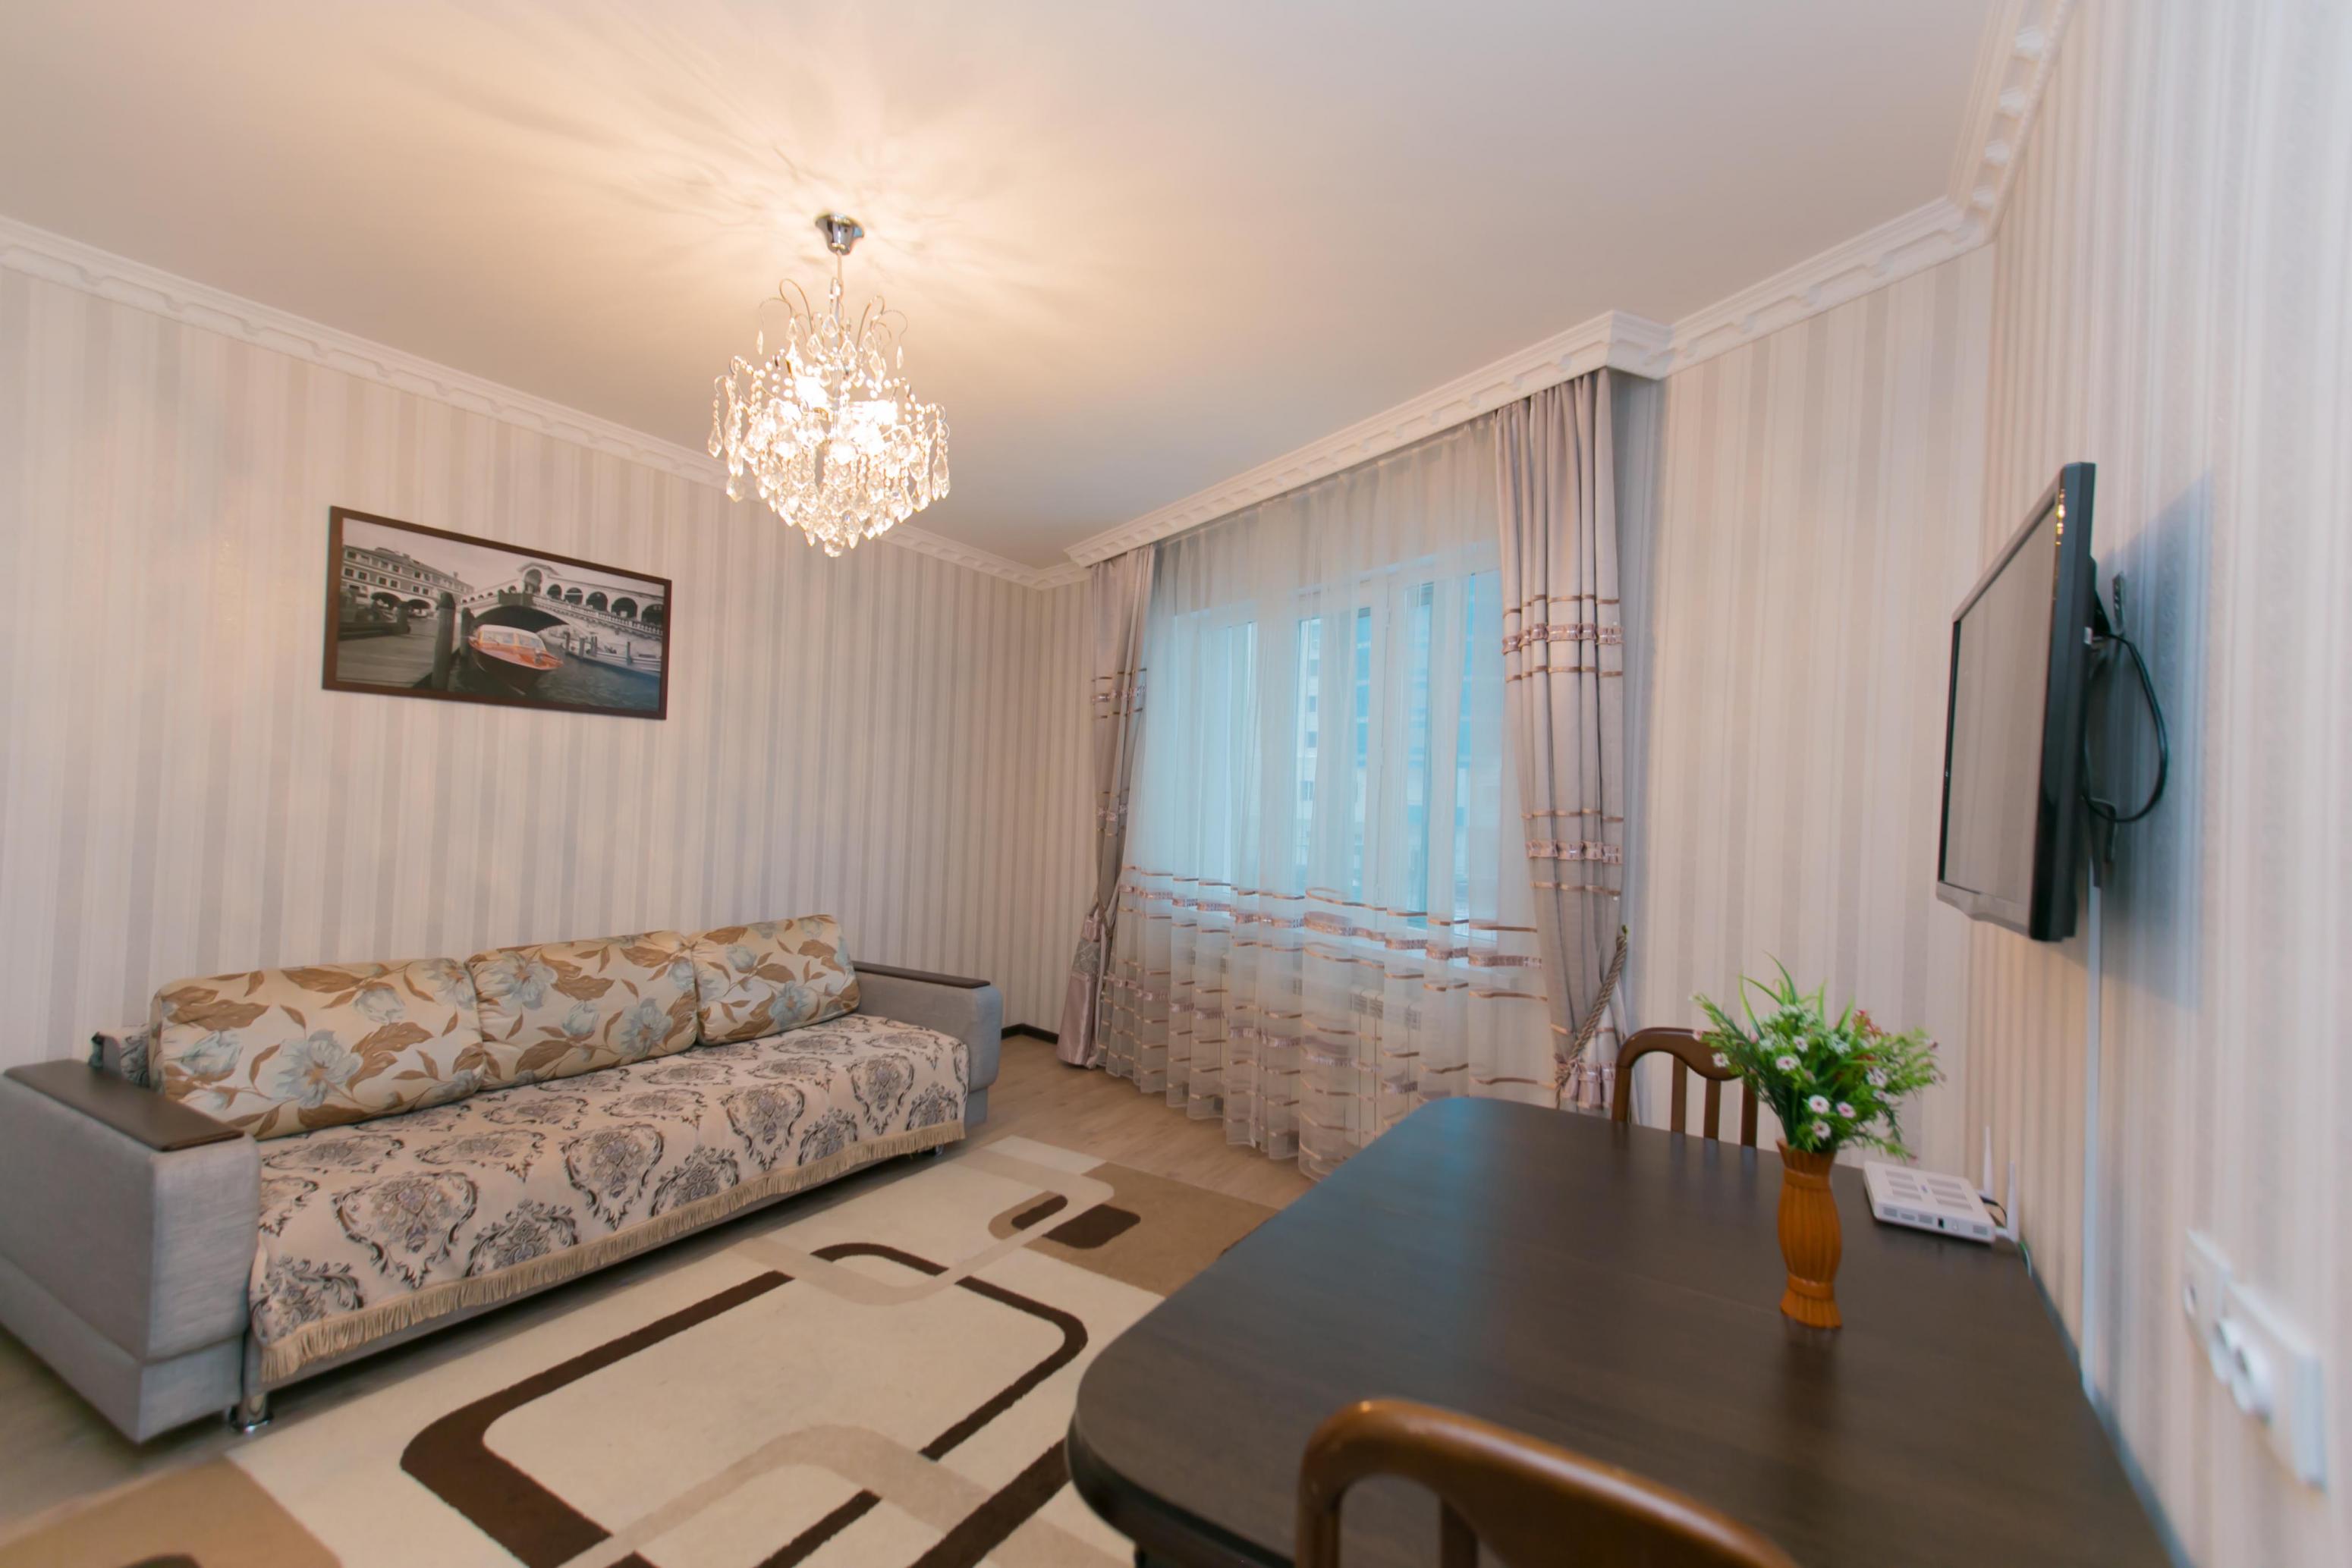 Астана квартира купить 1 комнатную. 2 Комнатная квартира в Астане. Квартира в Казахстане Астана. Квартиры в Астане фото. Уютные квартиры в Астане.